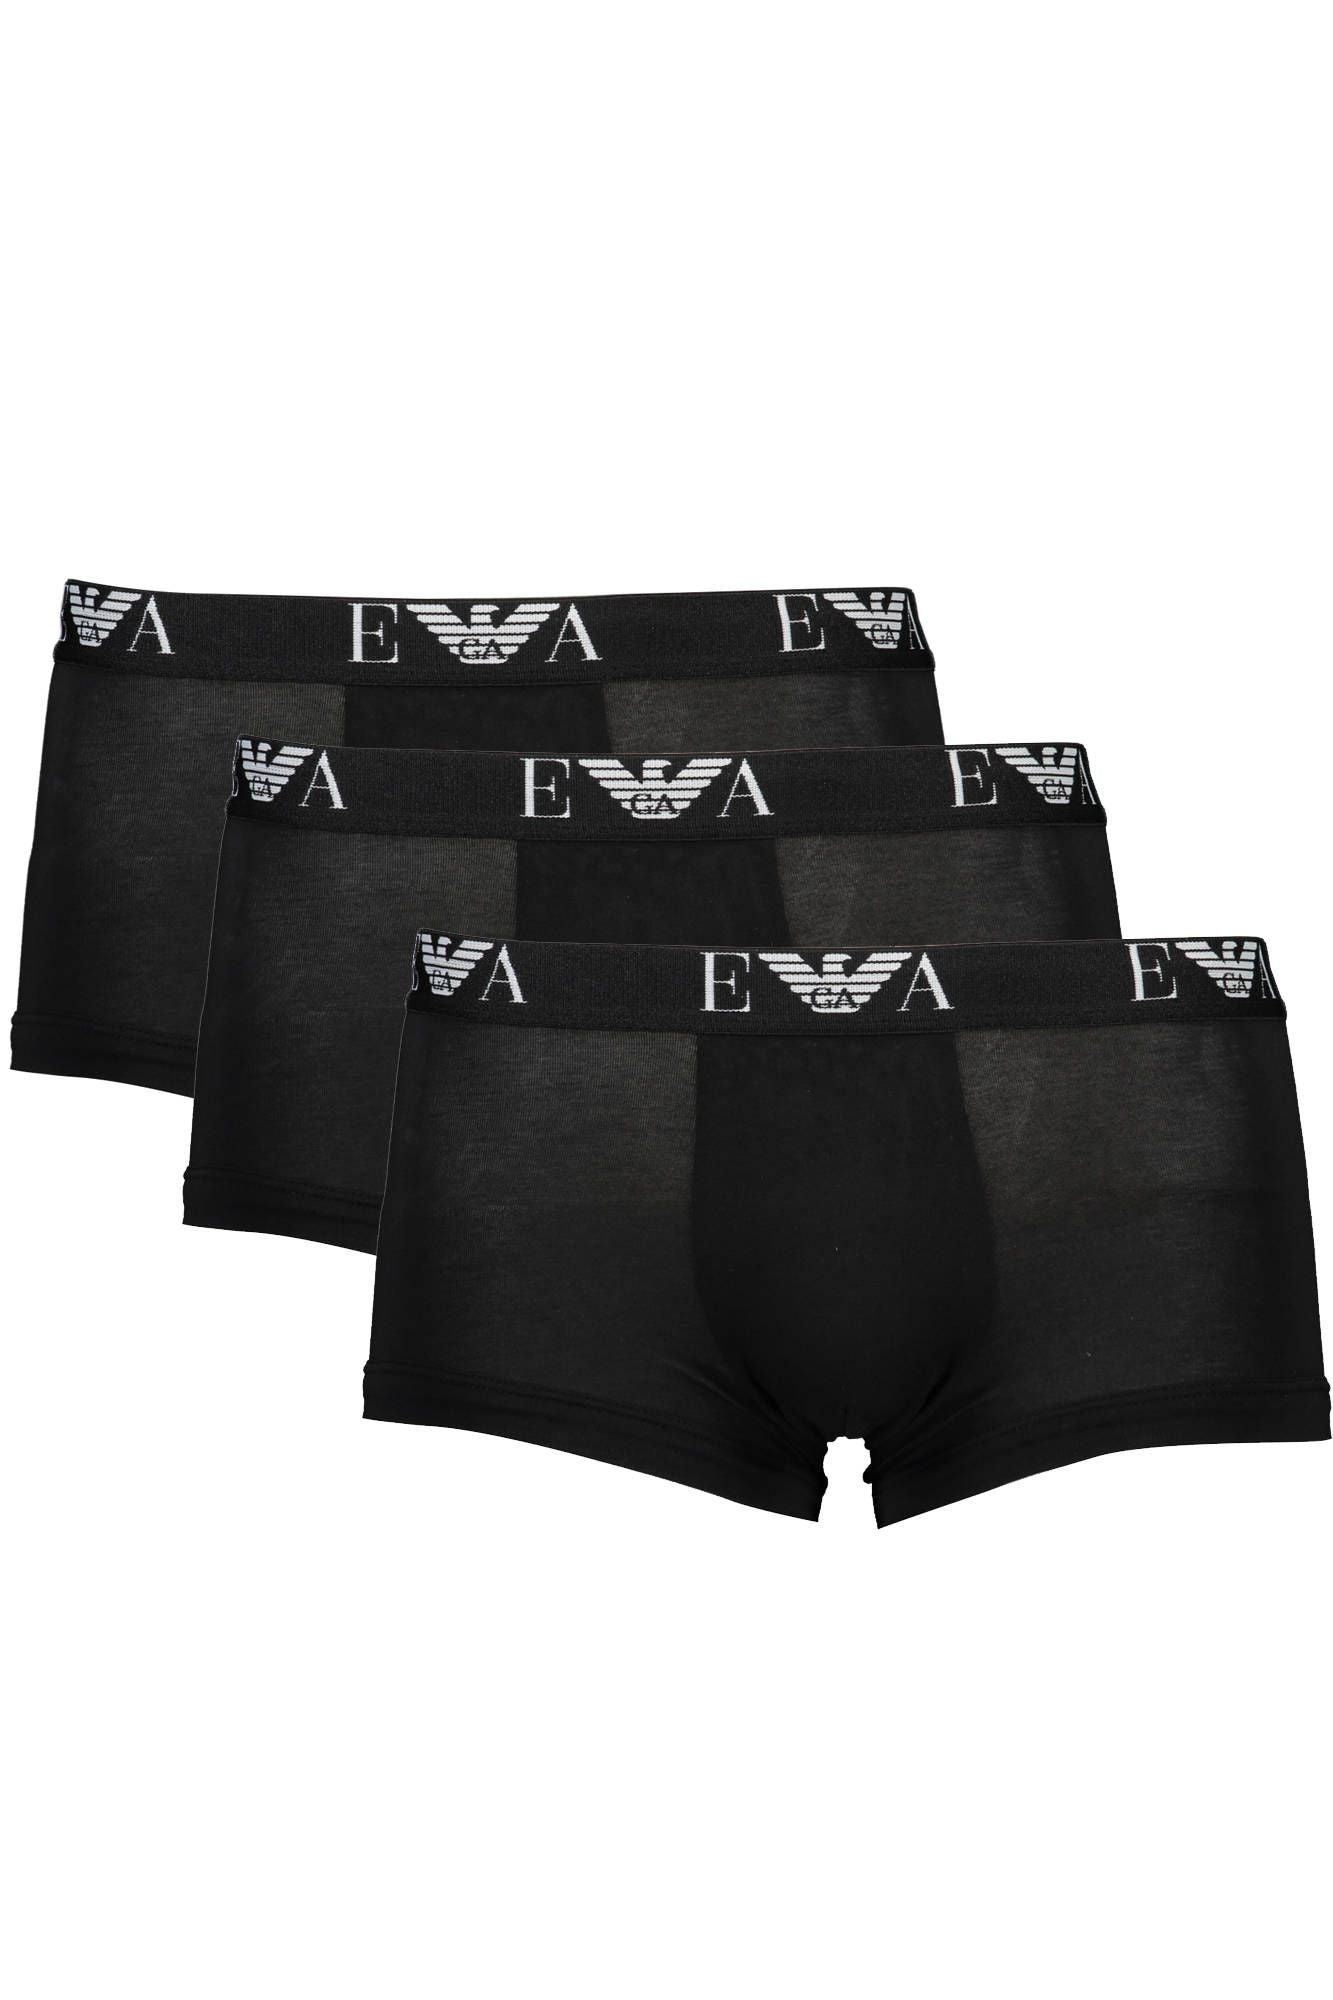 Emporio Armani Black Cotton Underwear